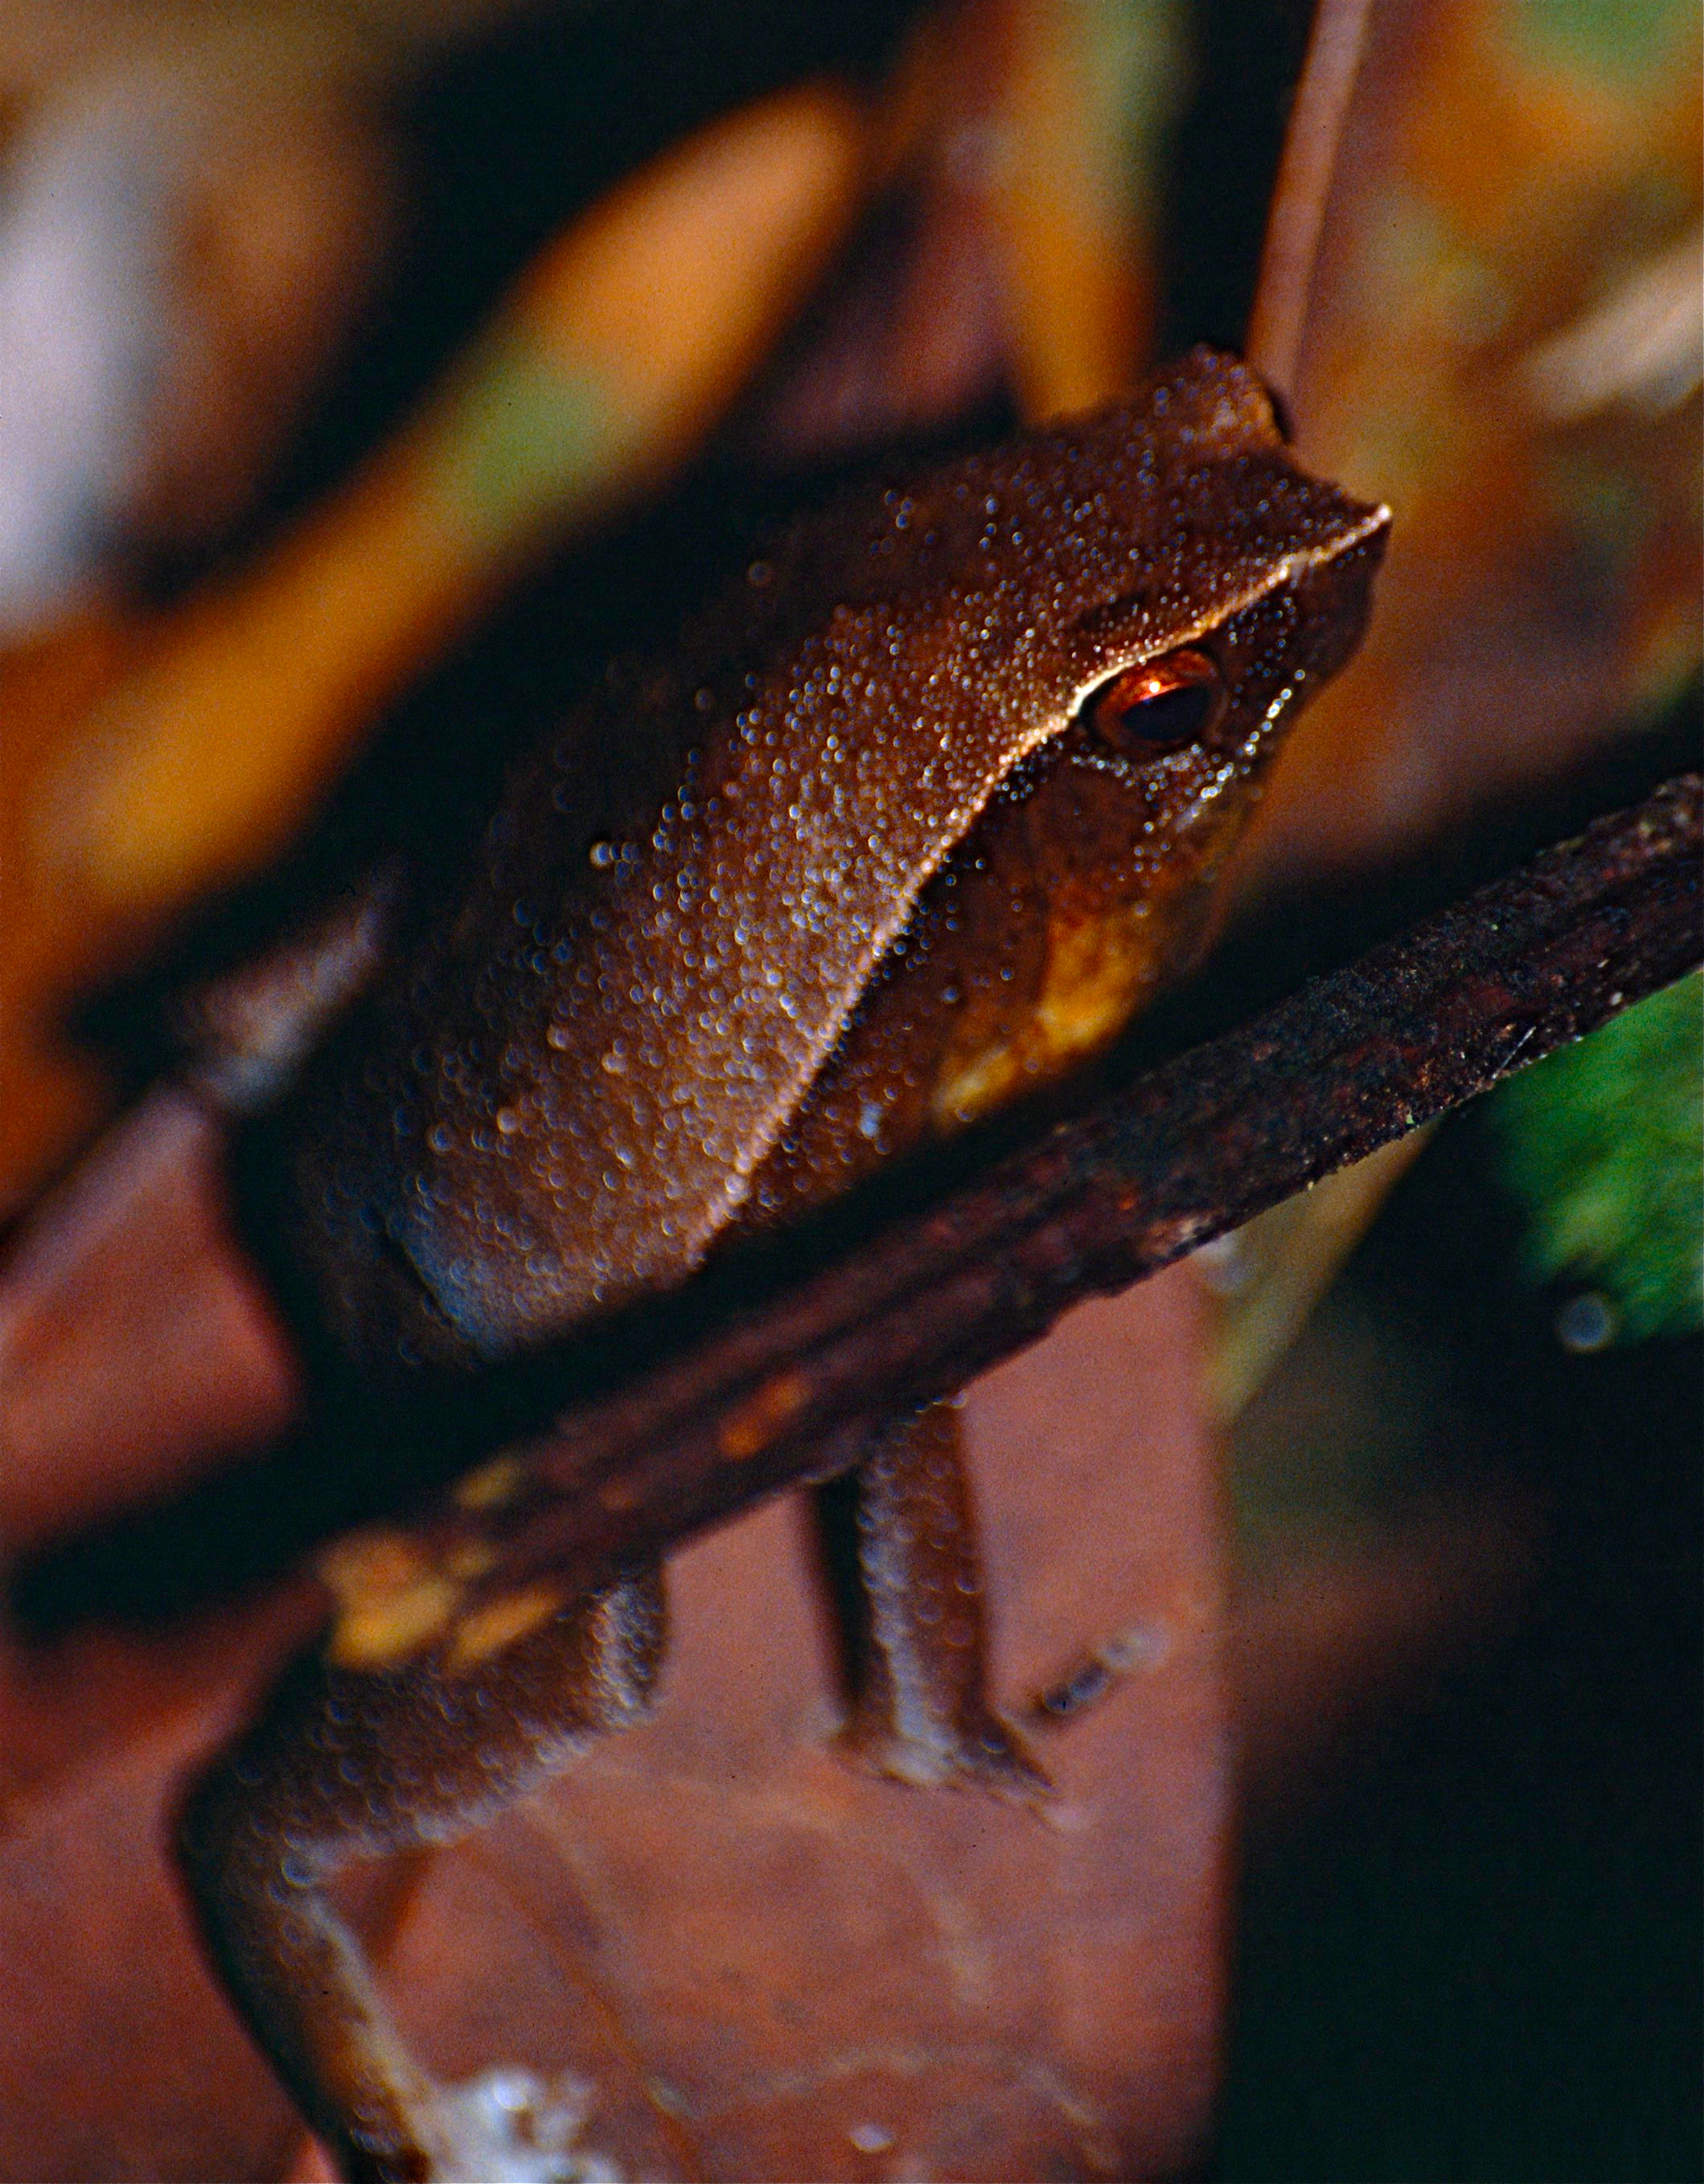 Image of Black-spotted sticky frog